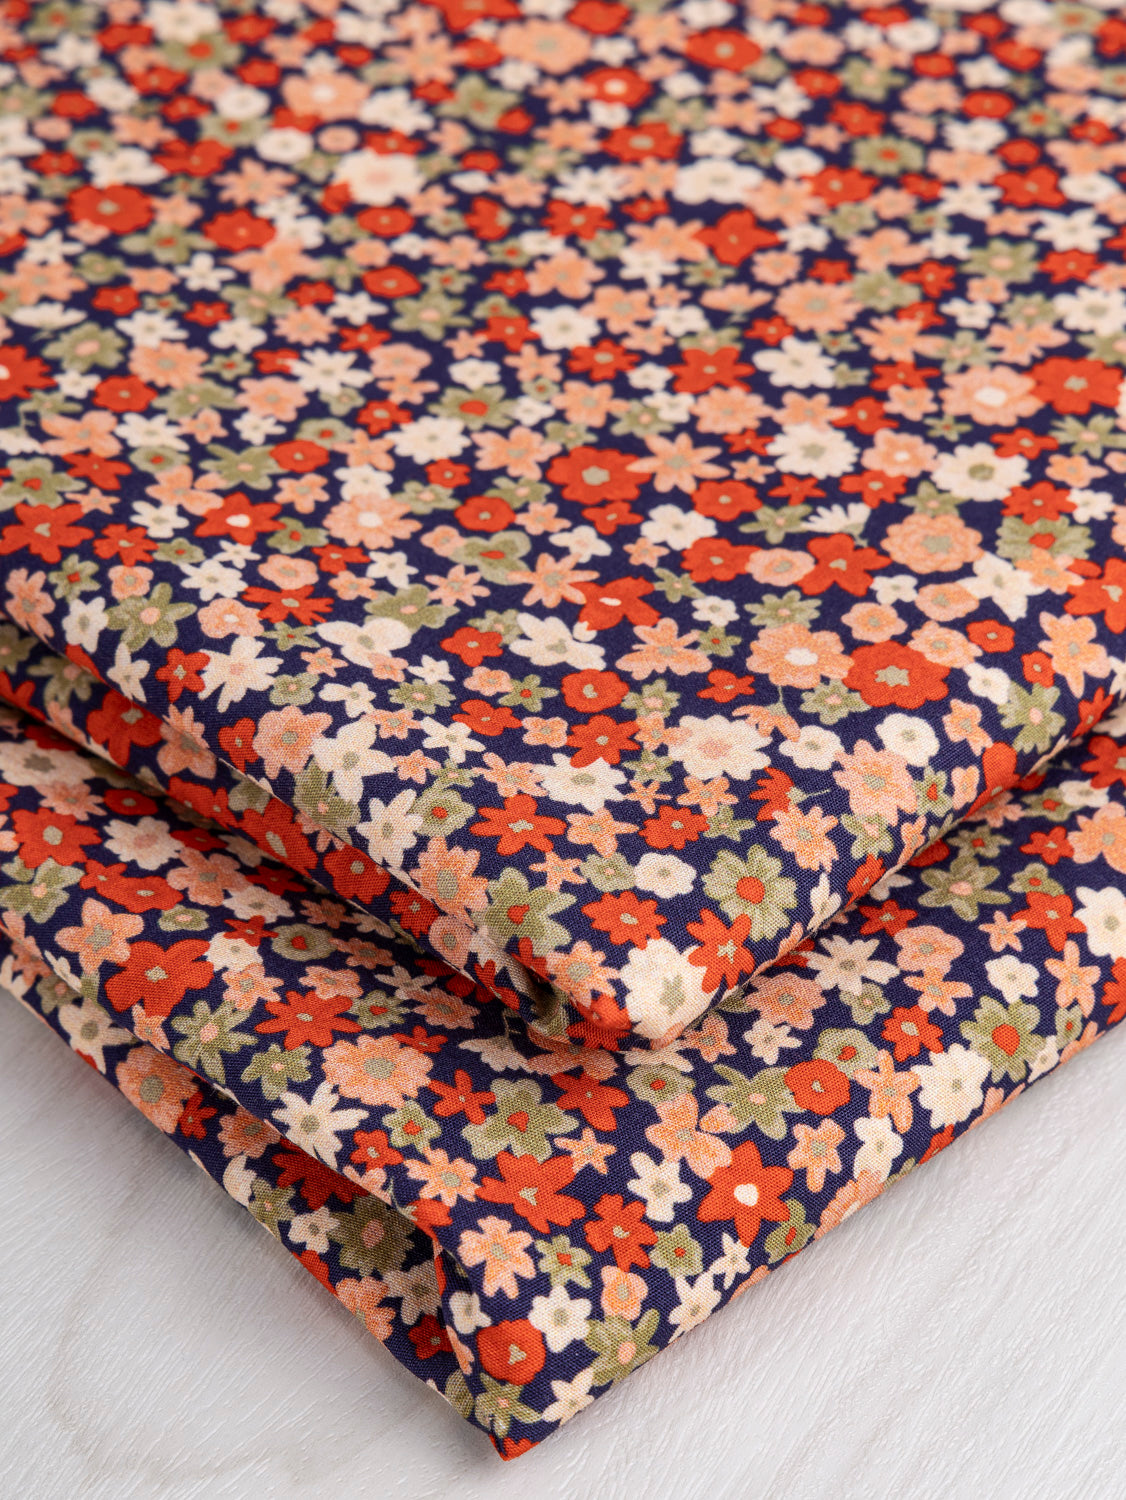 Ditzy Floral Print Cotton Poplin - Navy + Red + Green + Cream | Core Fabrics